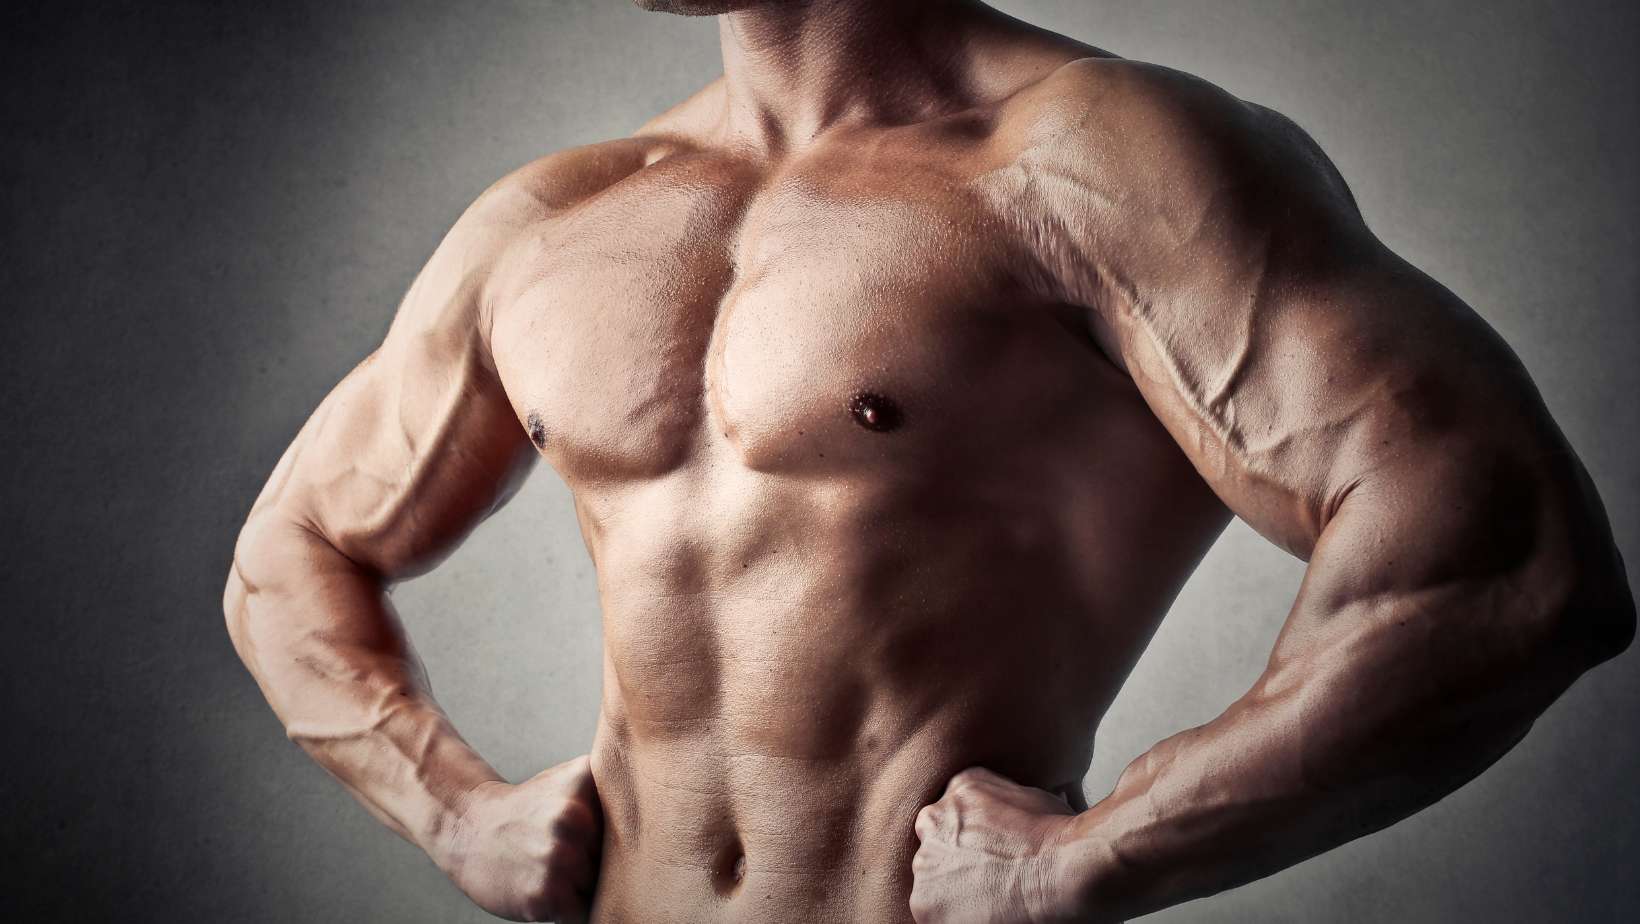 The portait of a muscular man torso